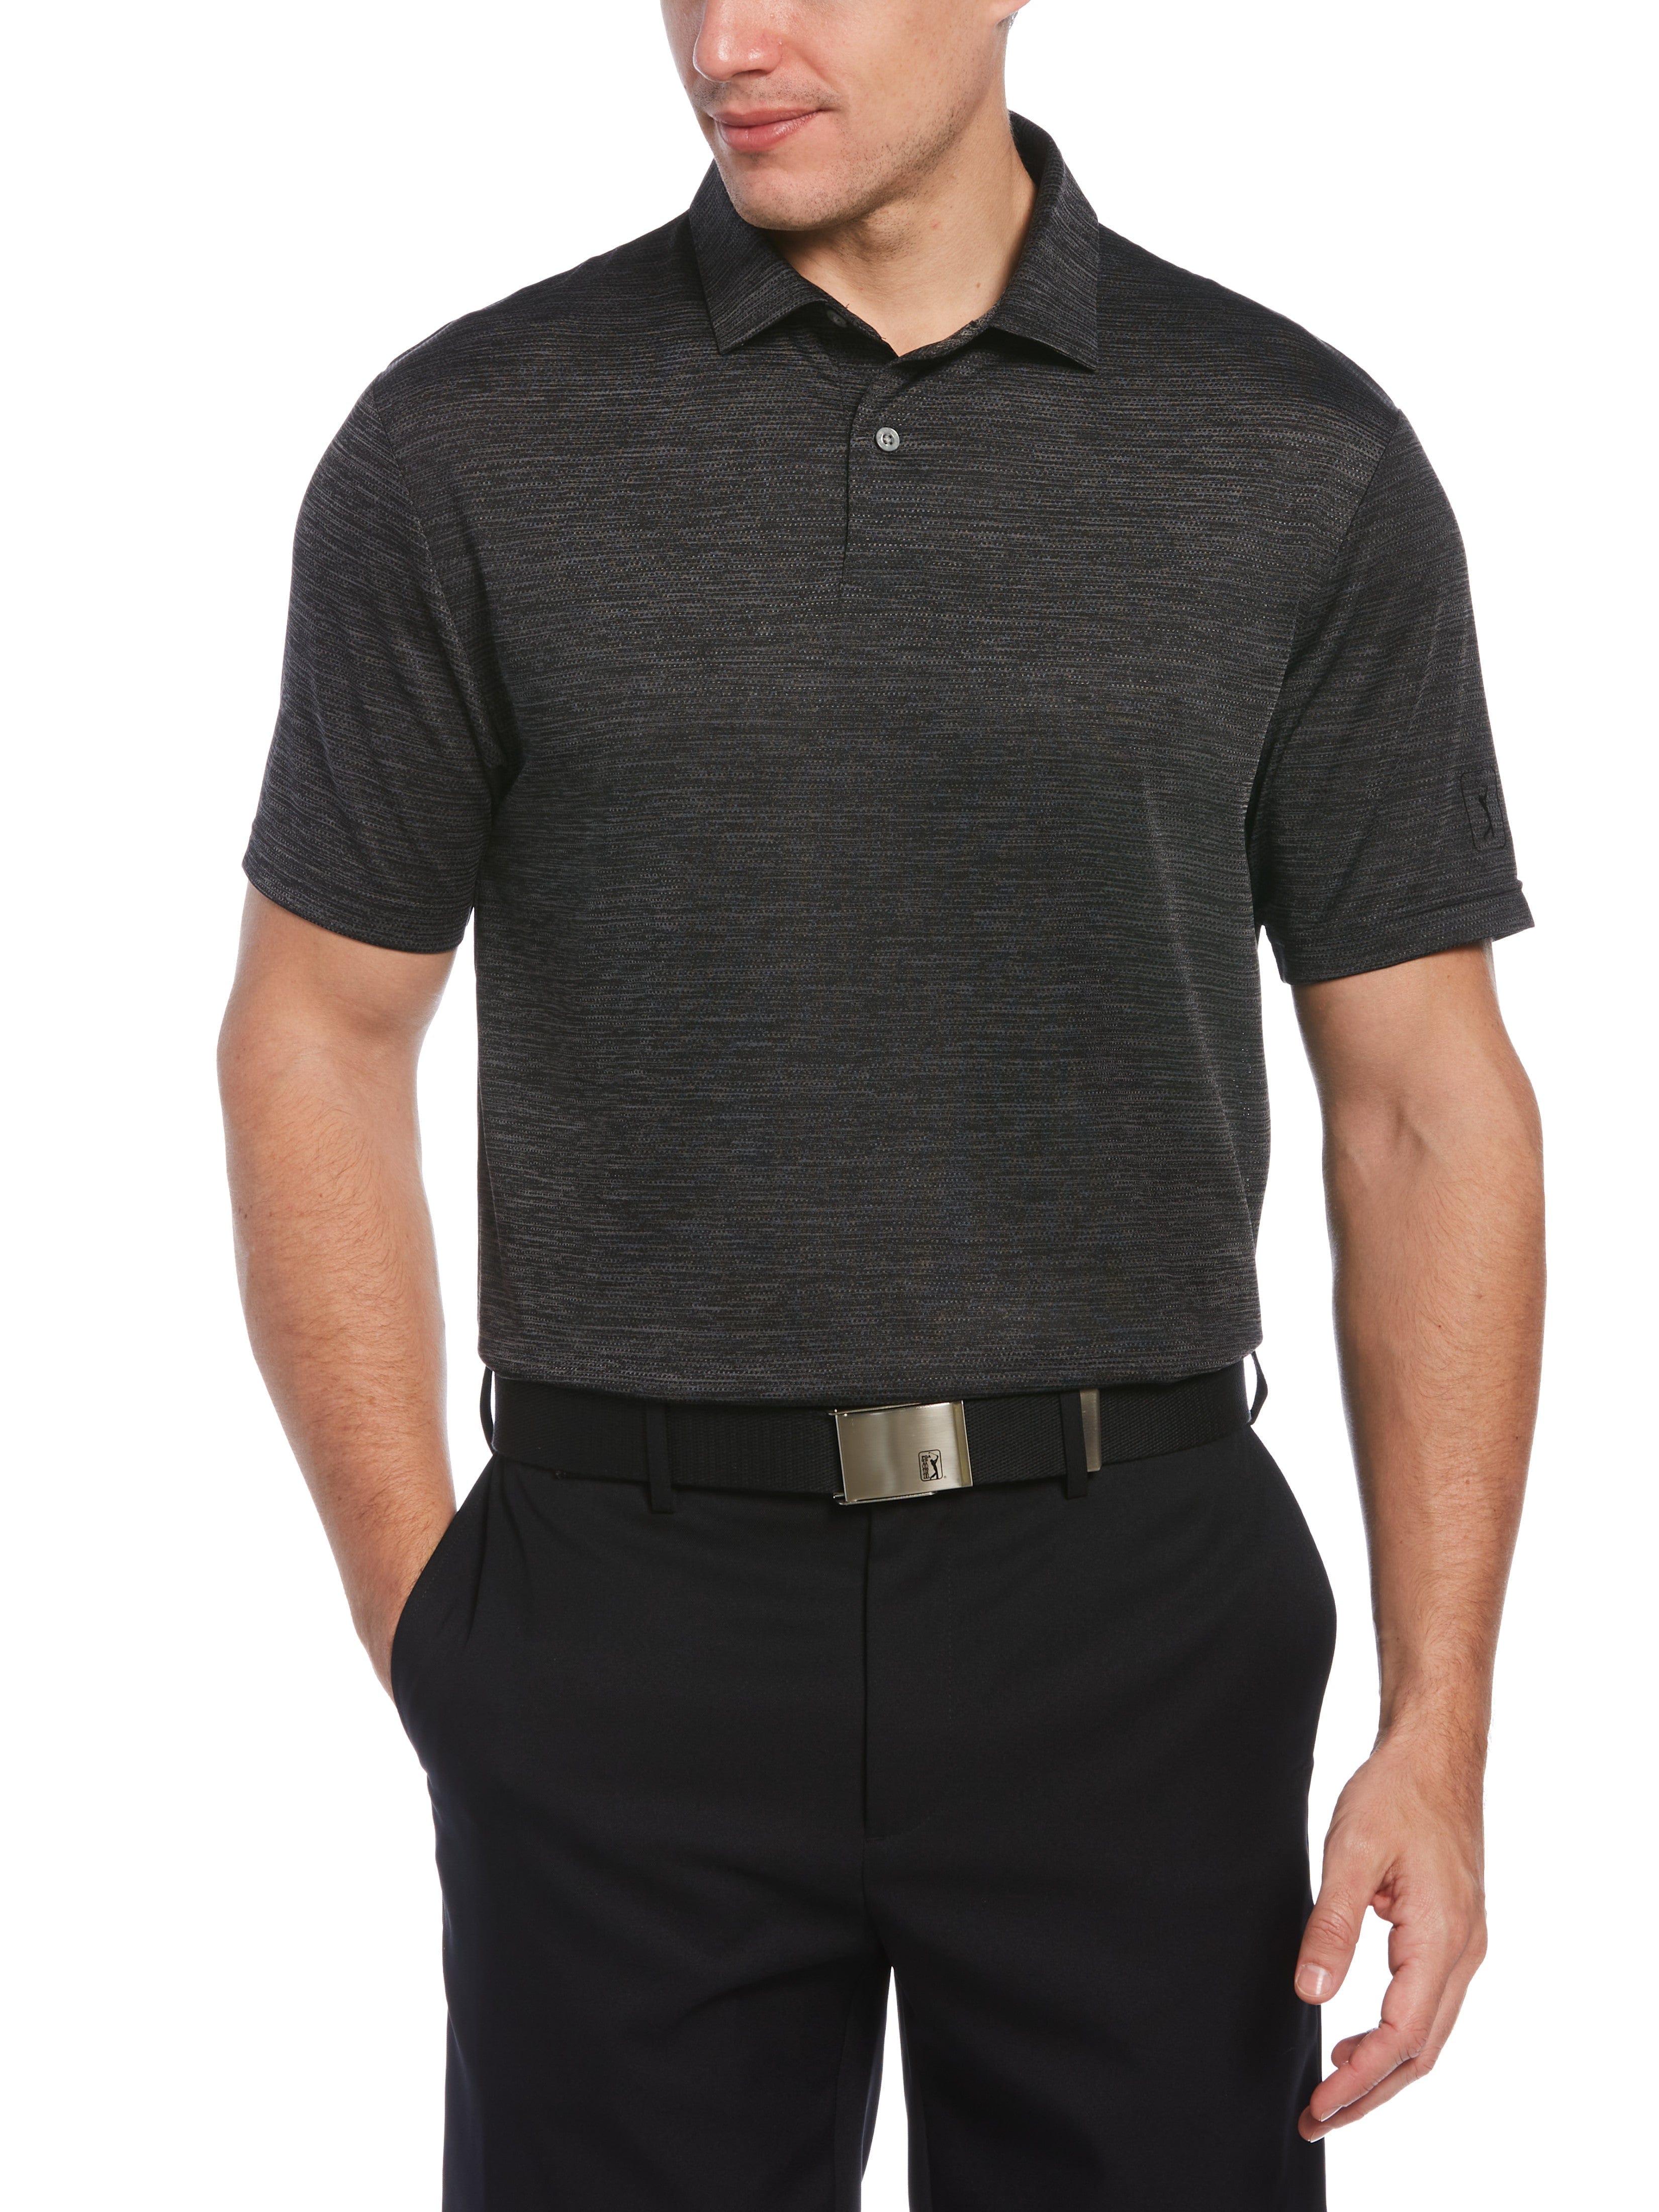 PGA TOUR Apparel Mens Space Dye Texture Golf Polo Shirt, Size Medium, Caviar Heather Black, 100% Polyester | Golf Apparel Shop